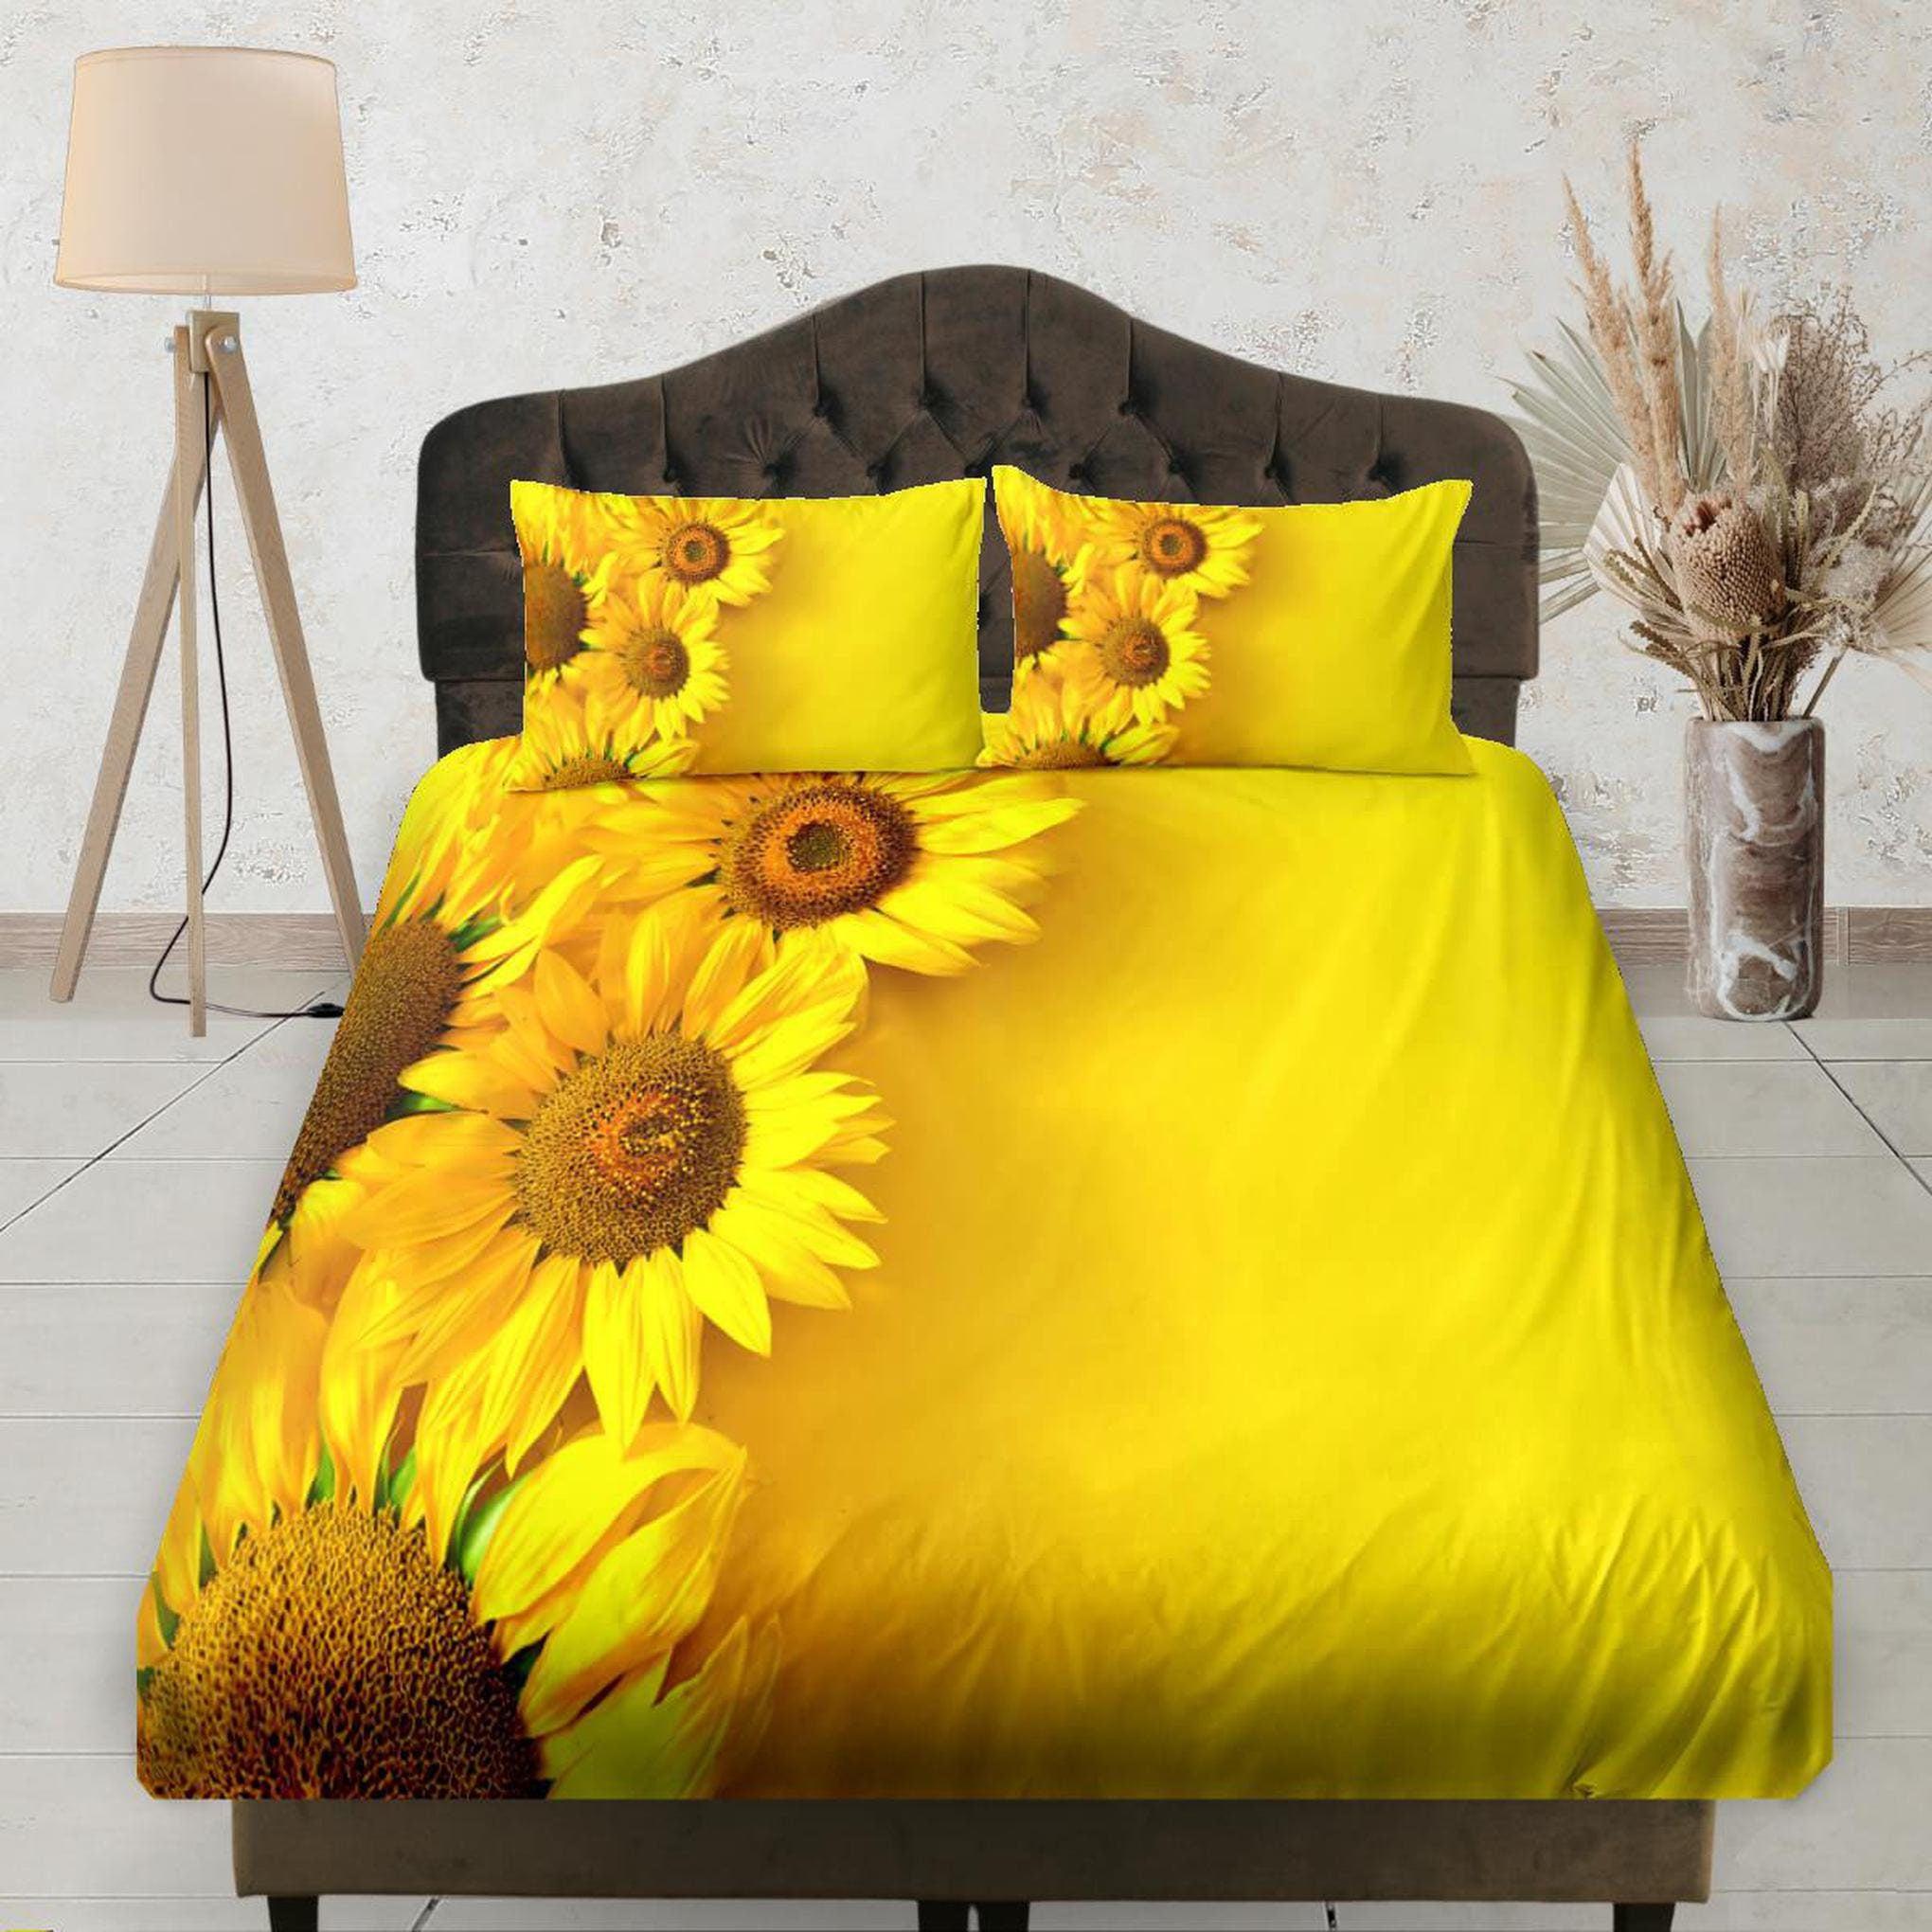 daintyduvet Sunflower Yellow Fitted Sheet Deep Pocket, Floral Prints, Aesthetic Boho Bedding Set Full, Summer Dorm Bedding, Crib Sheet, King, Queen